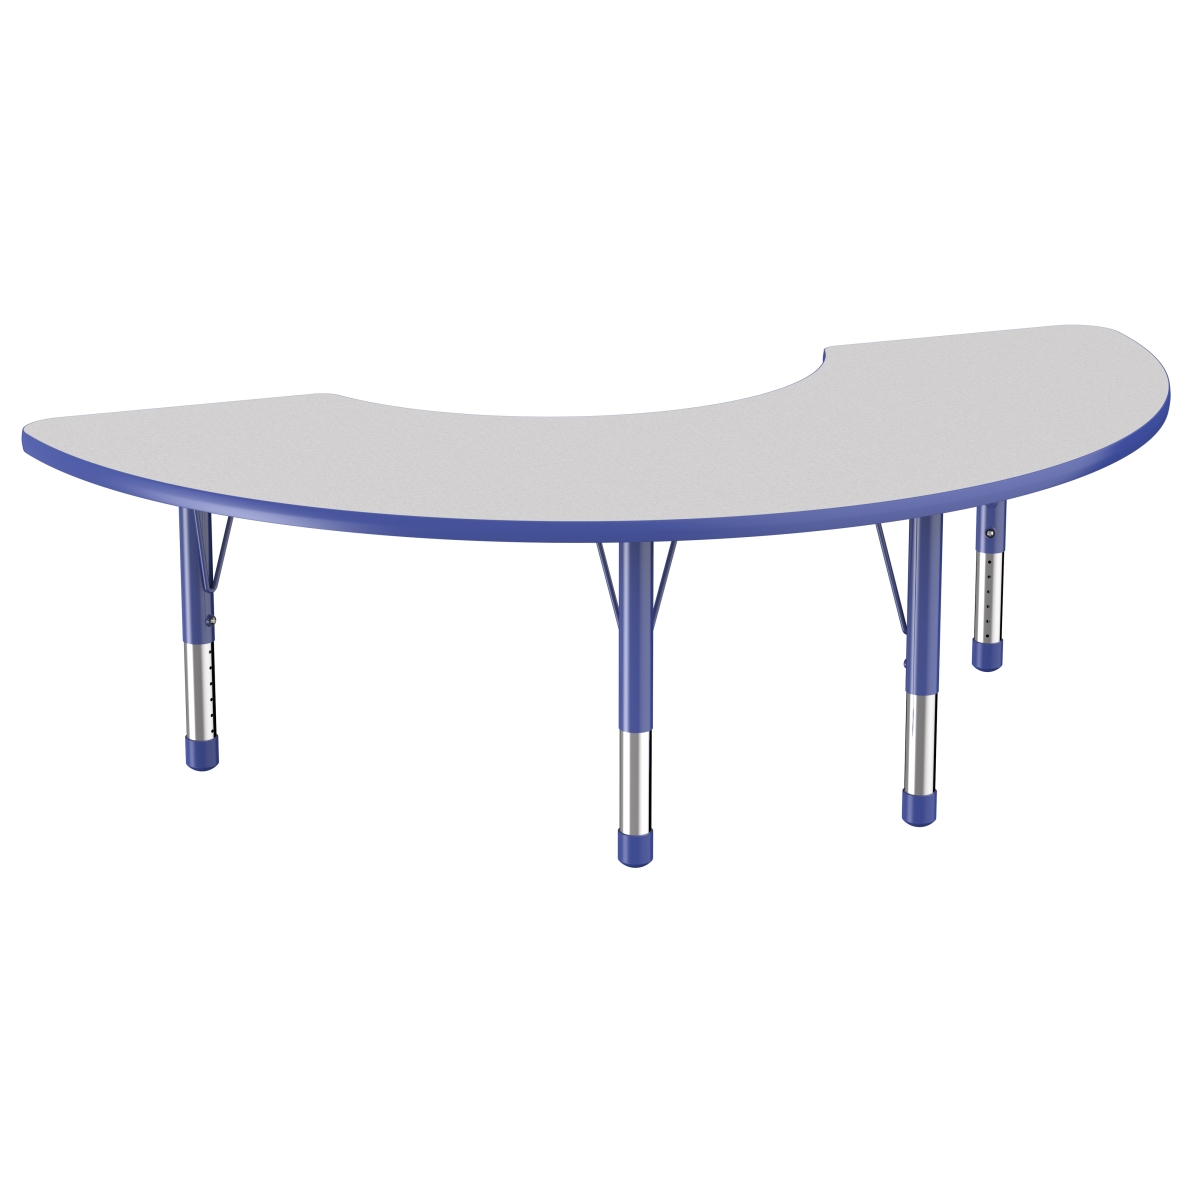 10079-gybl 36 X 72 In. Half Moon T-mold Adjustable Activity Table With Chunky Leg - Grey & Blue